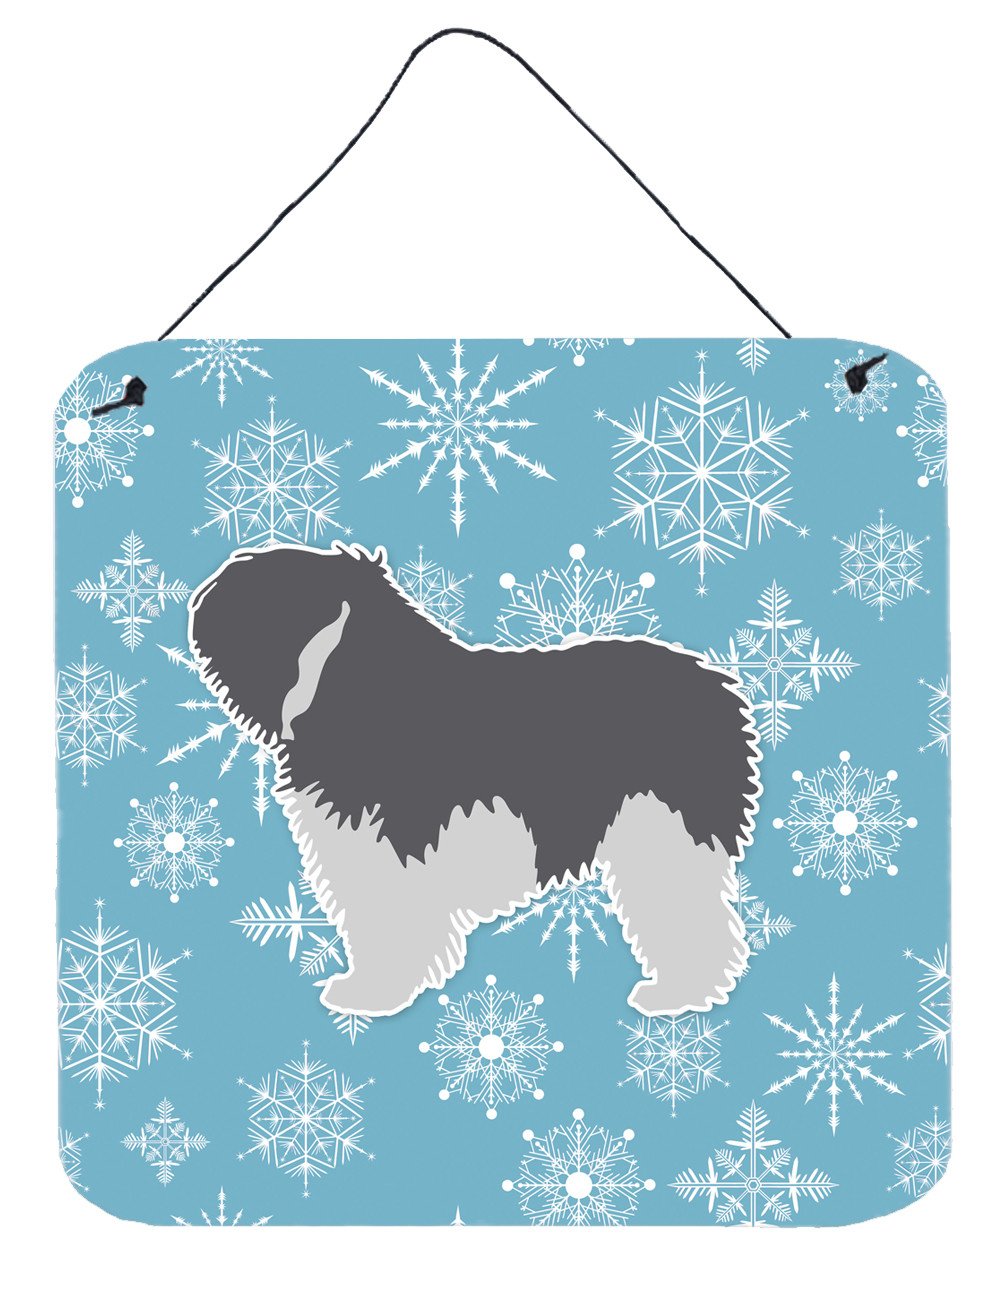 Winter Snowflake Polish Lowland Sheepdog Dog Wall or Door Hanging Prints BB3532DS66 by Caroline's Treasures